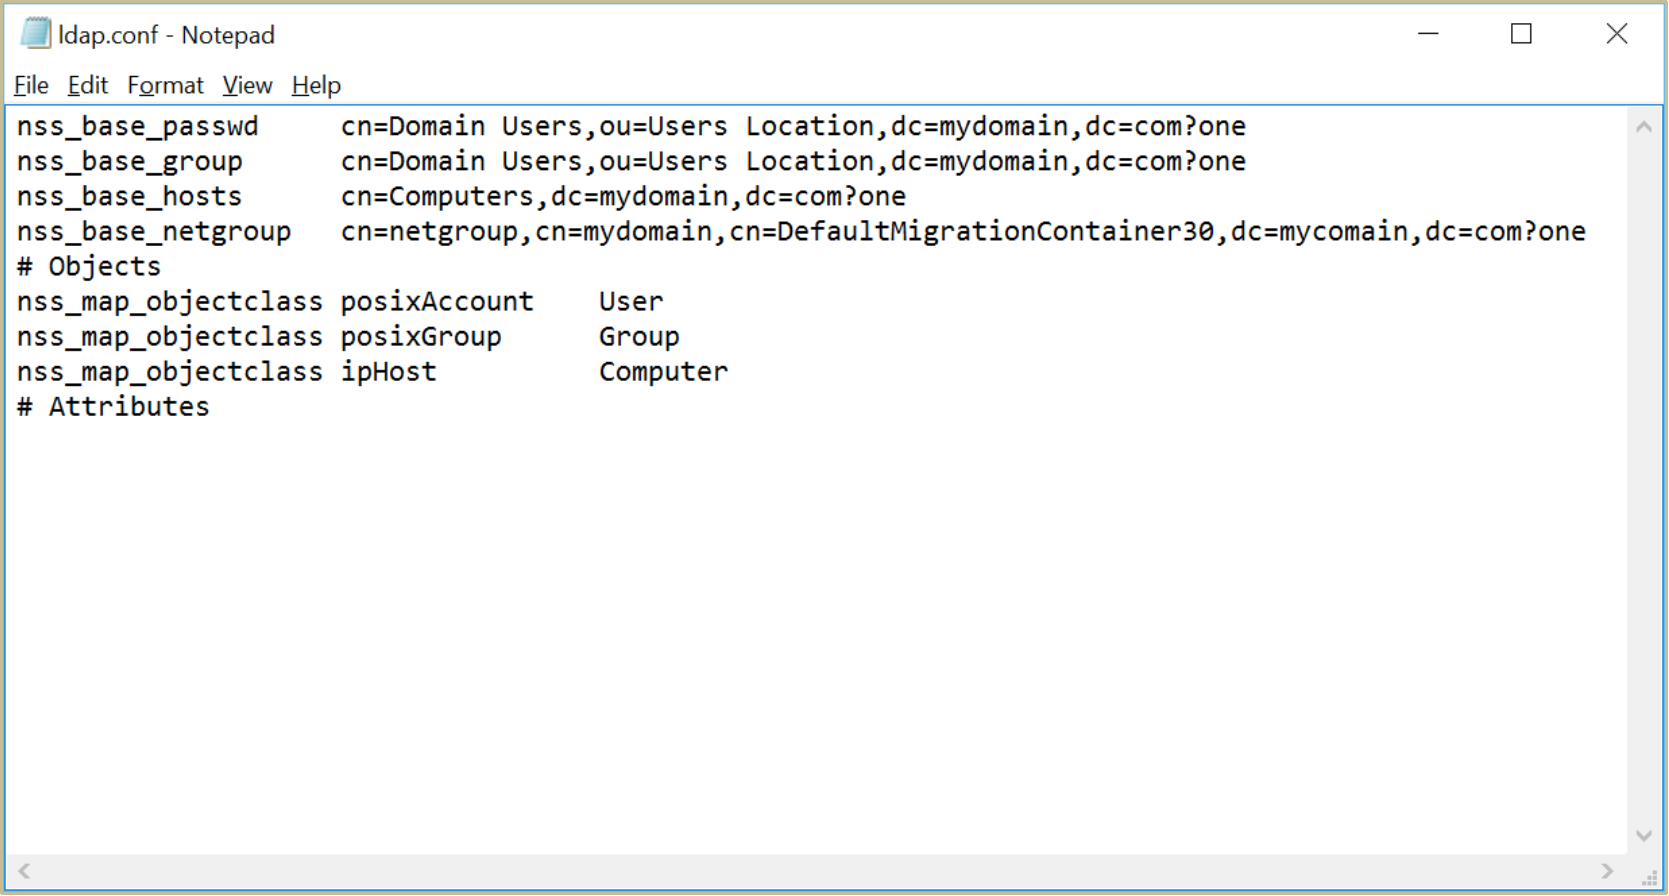 A screenshot of an example ldap.conf configuration file.